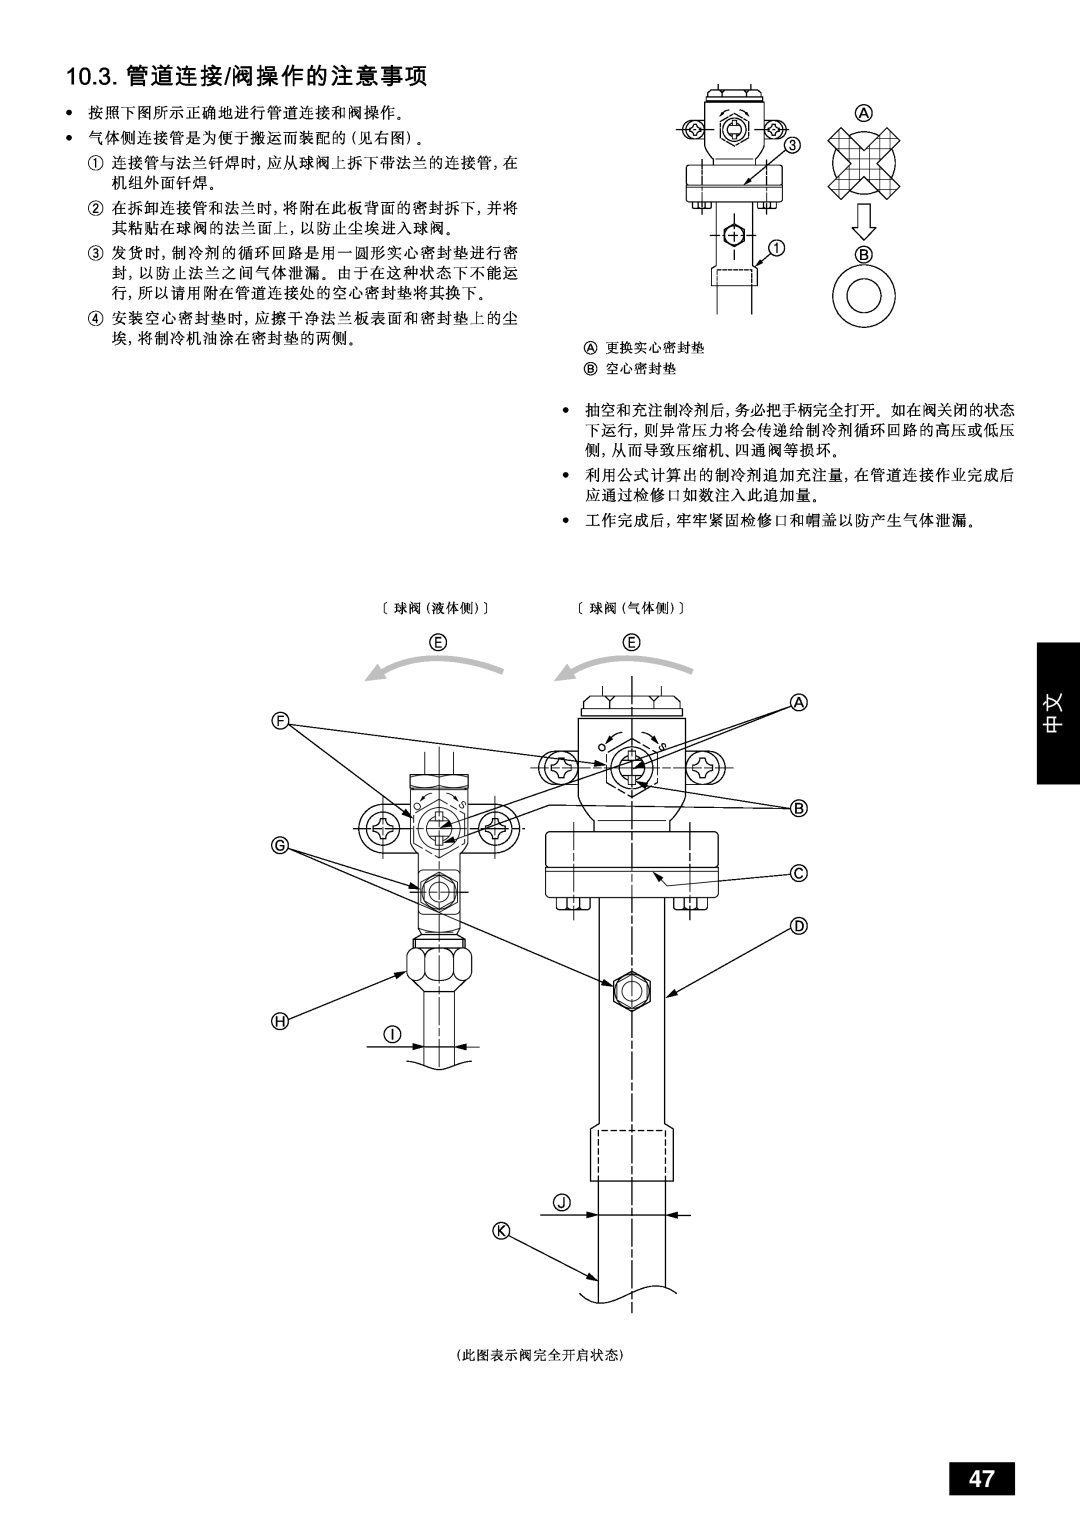 Mitsubishi Electronics PUHY-YMC Nmkpk=L, B C D, H I J K, #$%&*+,- ./012 q *+,-./#0, r !#$%& *+,-./0#$123 !#$%&*+ 